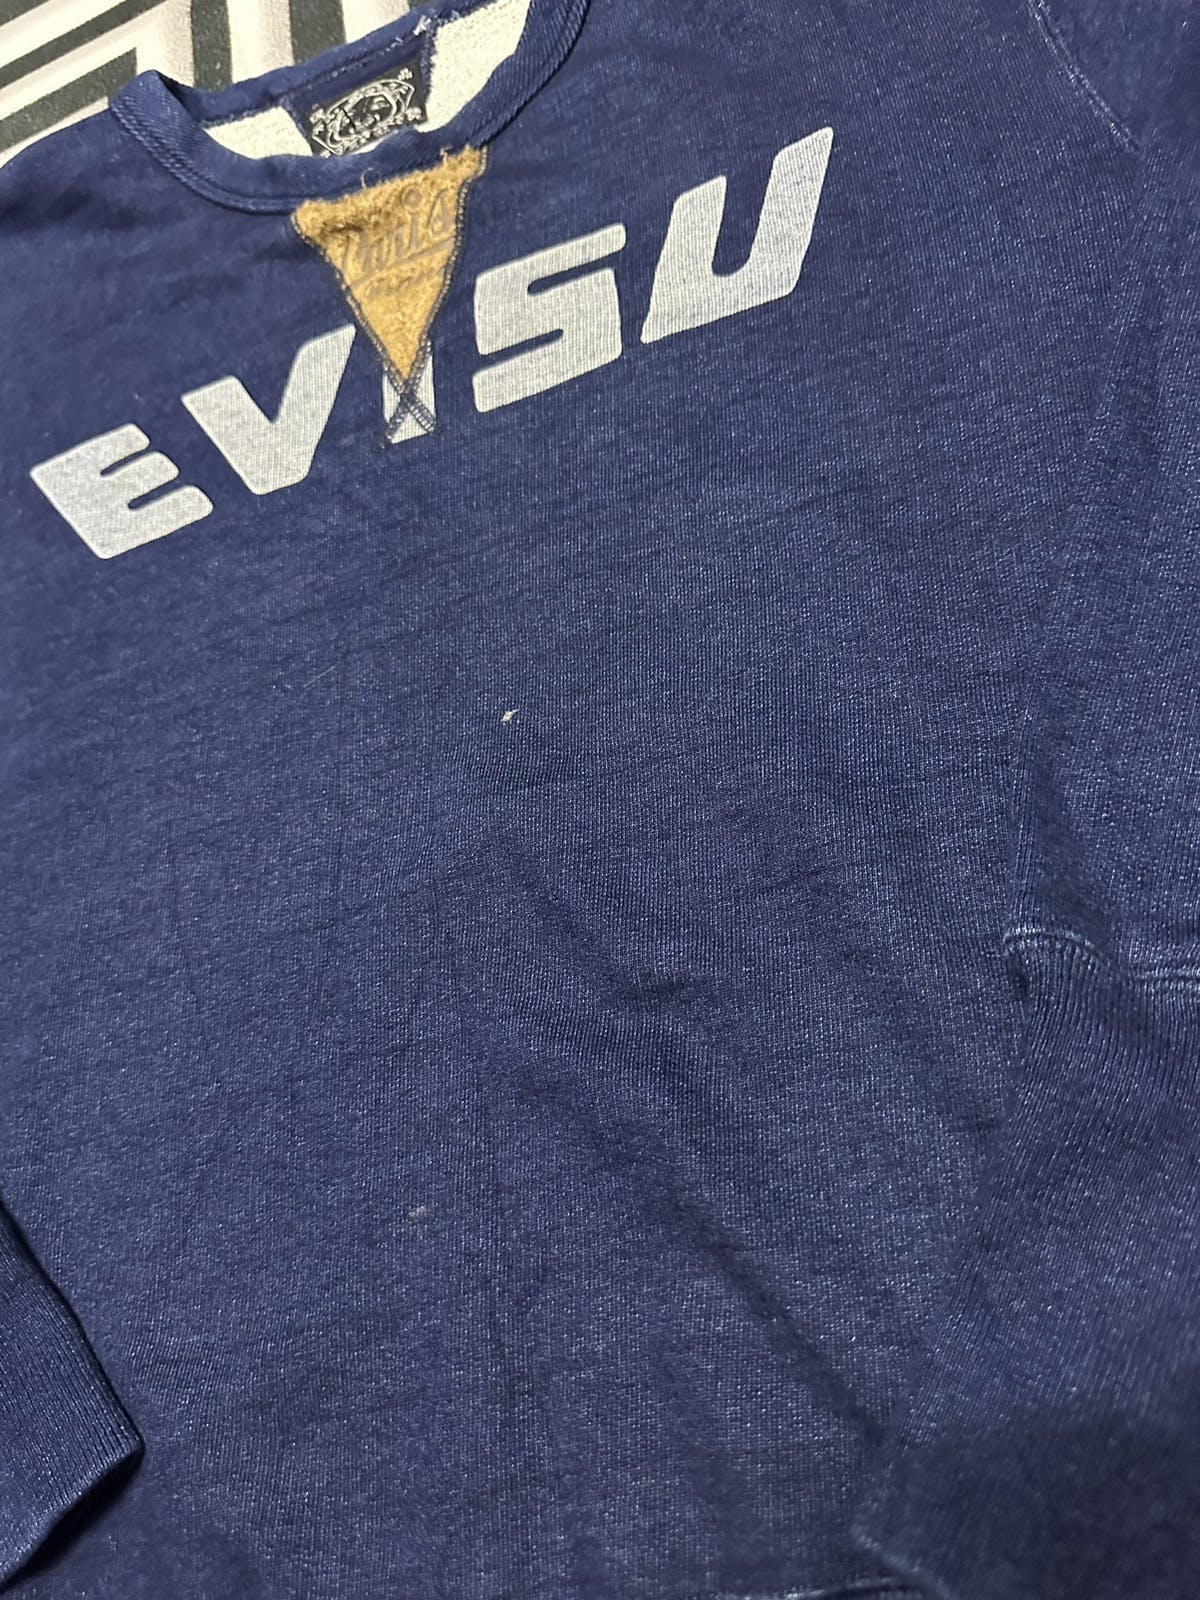 Evisu spellout sweatshirt - 4